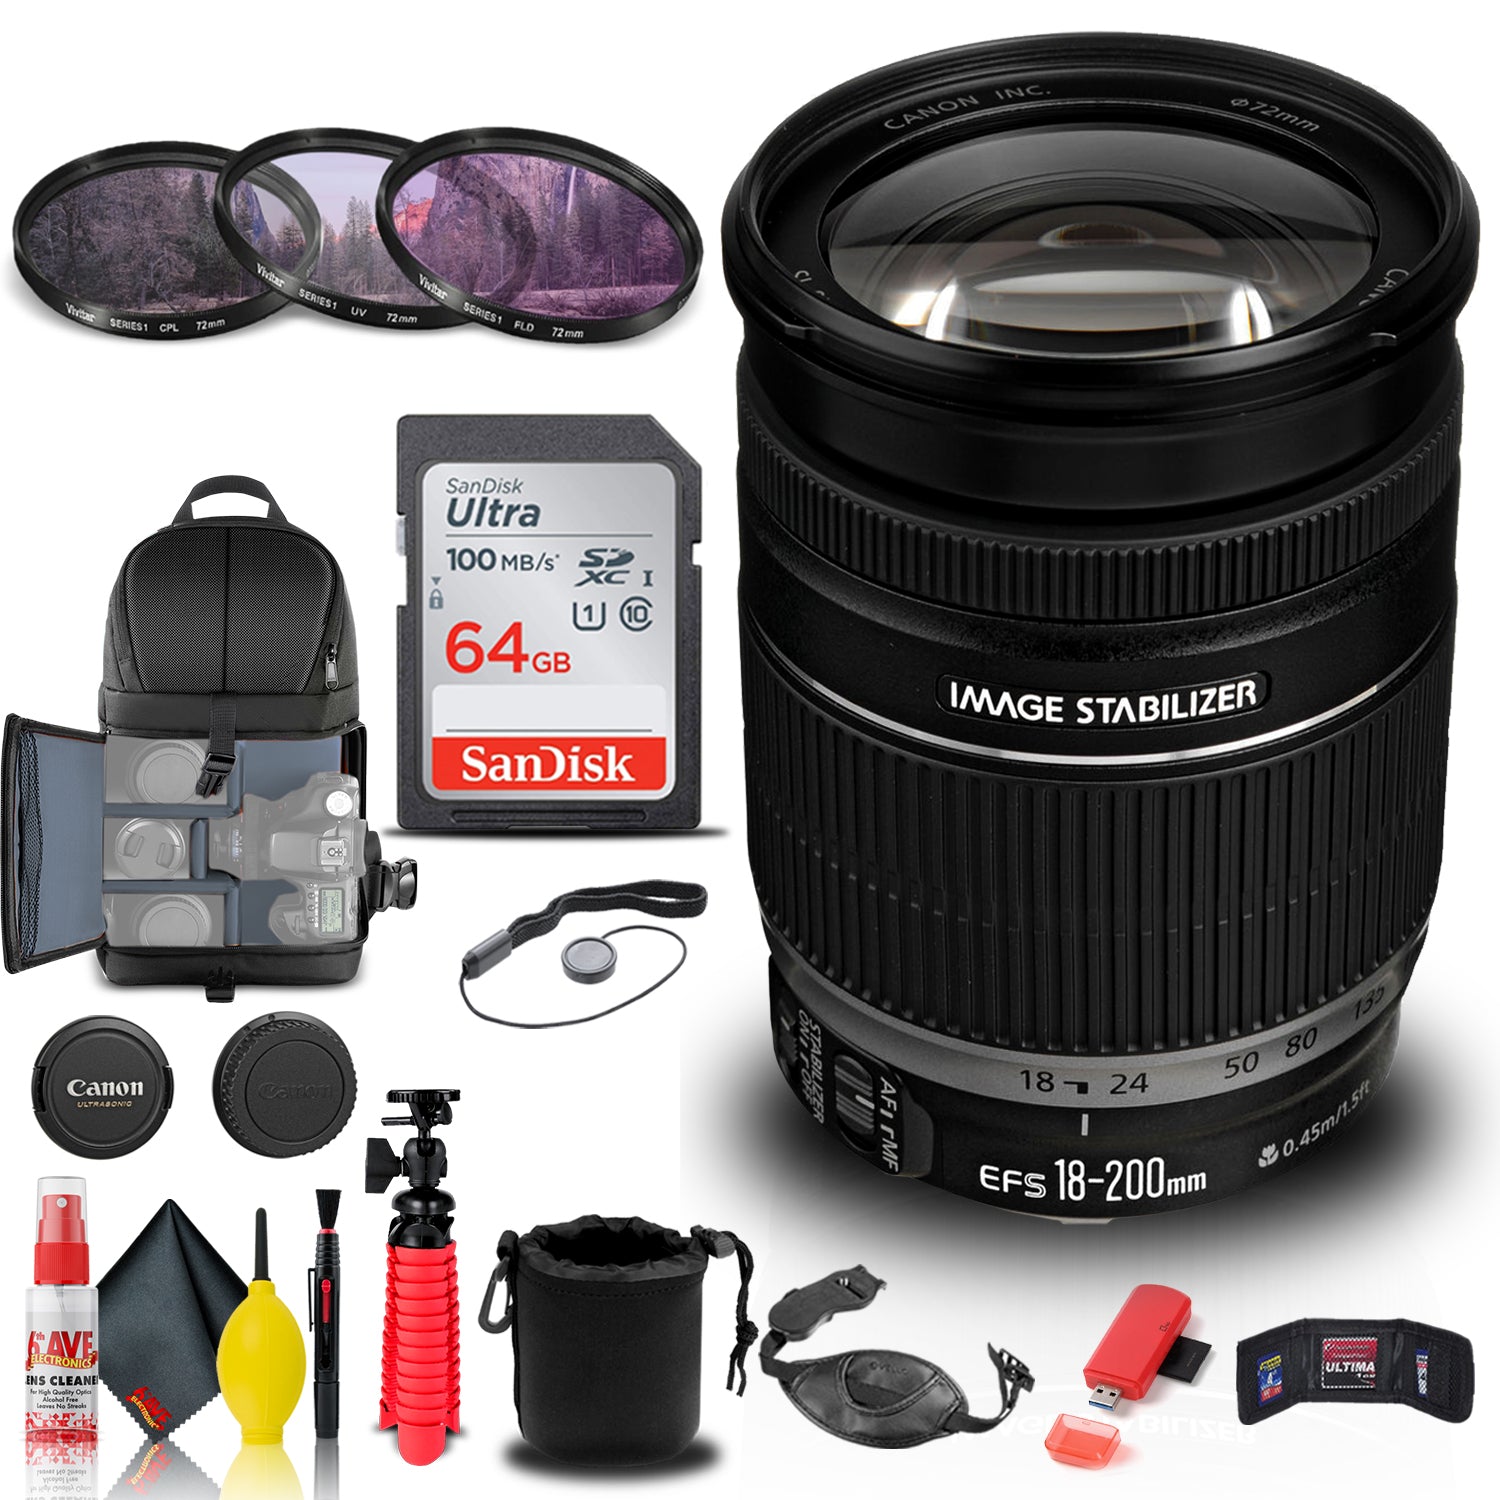 Canon EF-S 18-200mm f/3.5-5.6 IS Lens (2752B002) + Filter Kit + BackPack + More